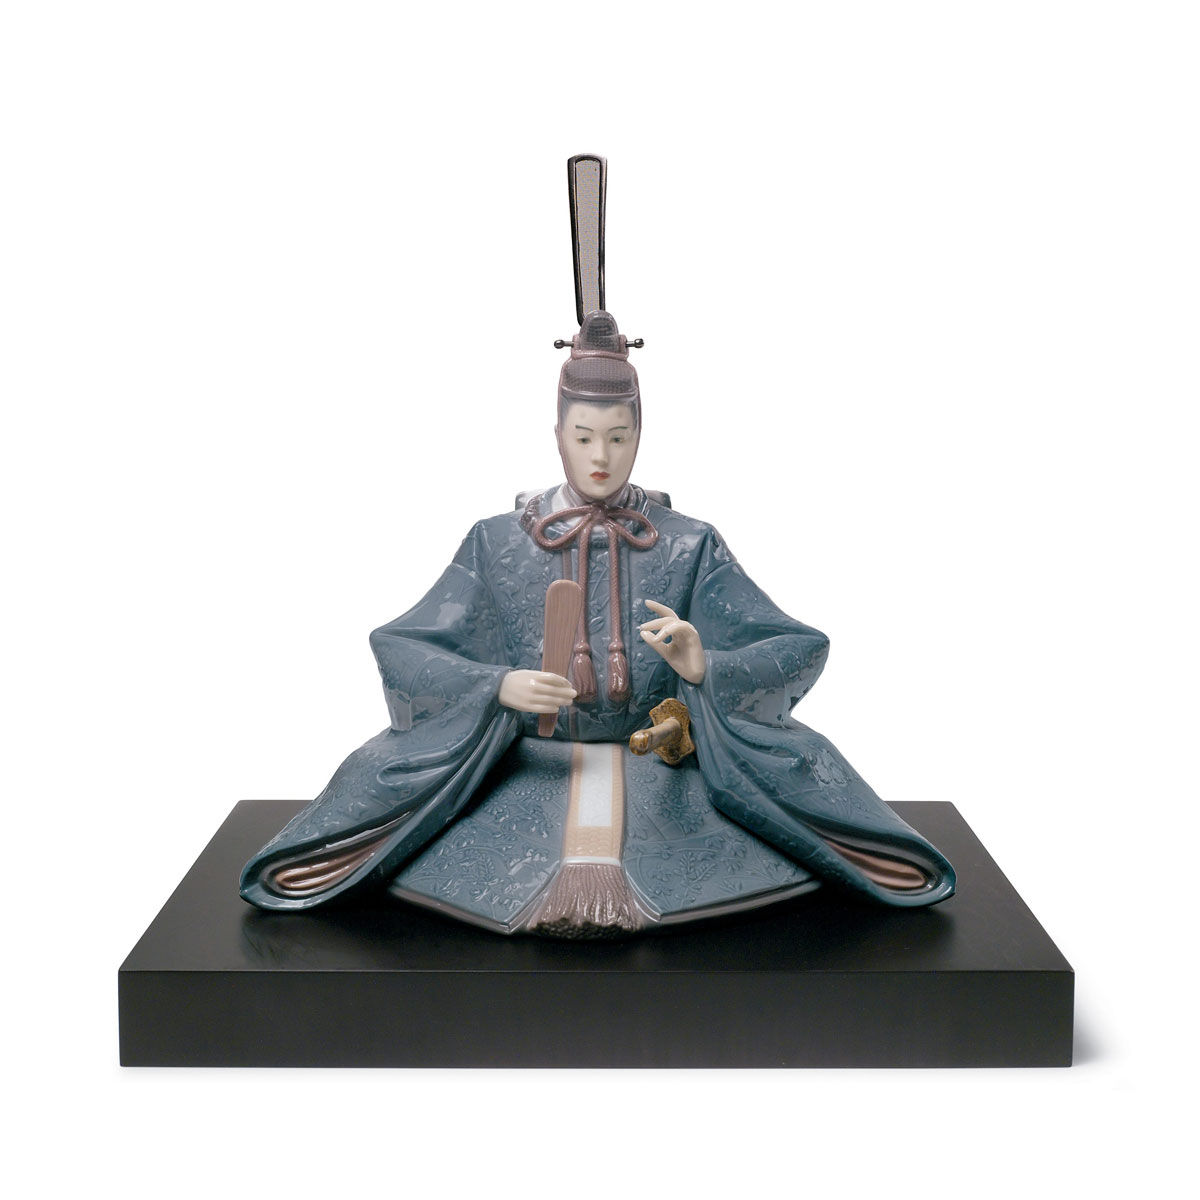 Lladro Classic Sculpture, Hina Dolls Emperor Figurine